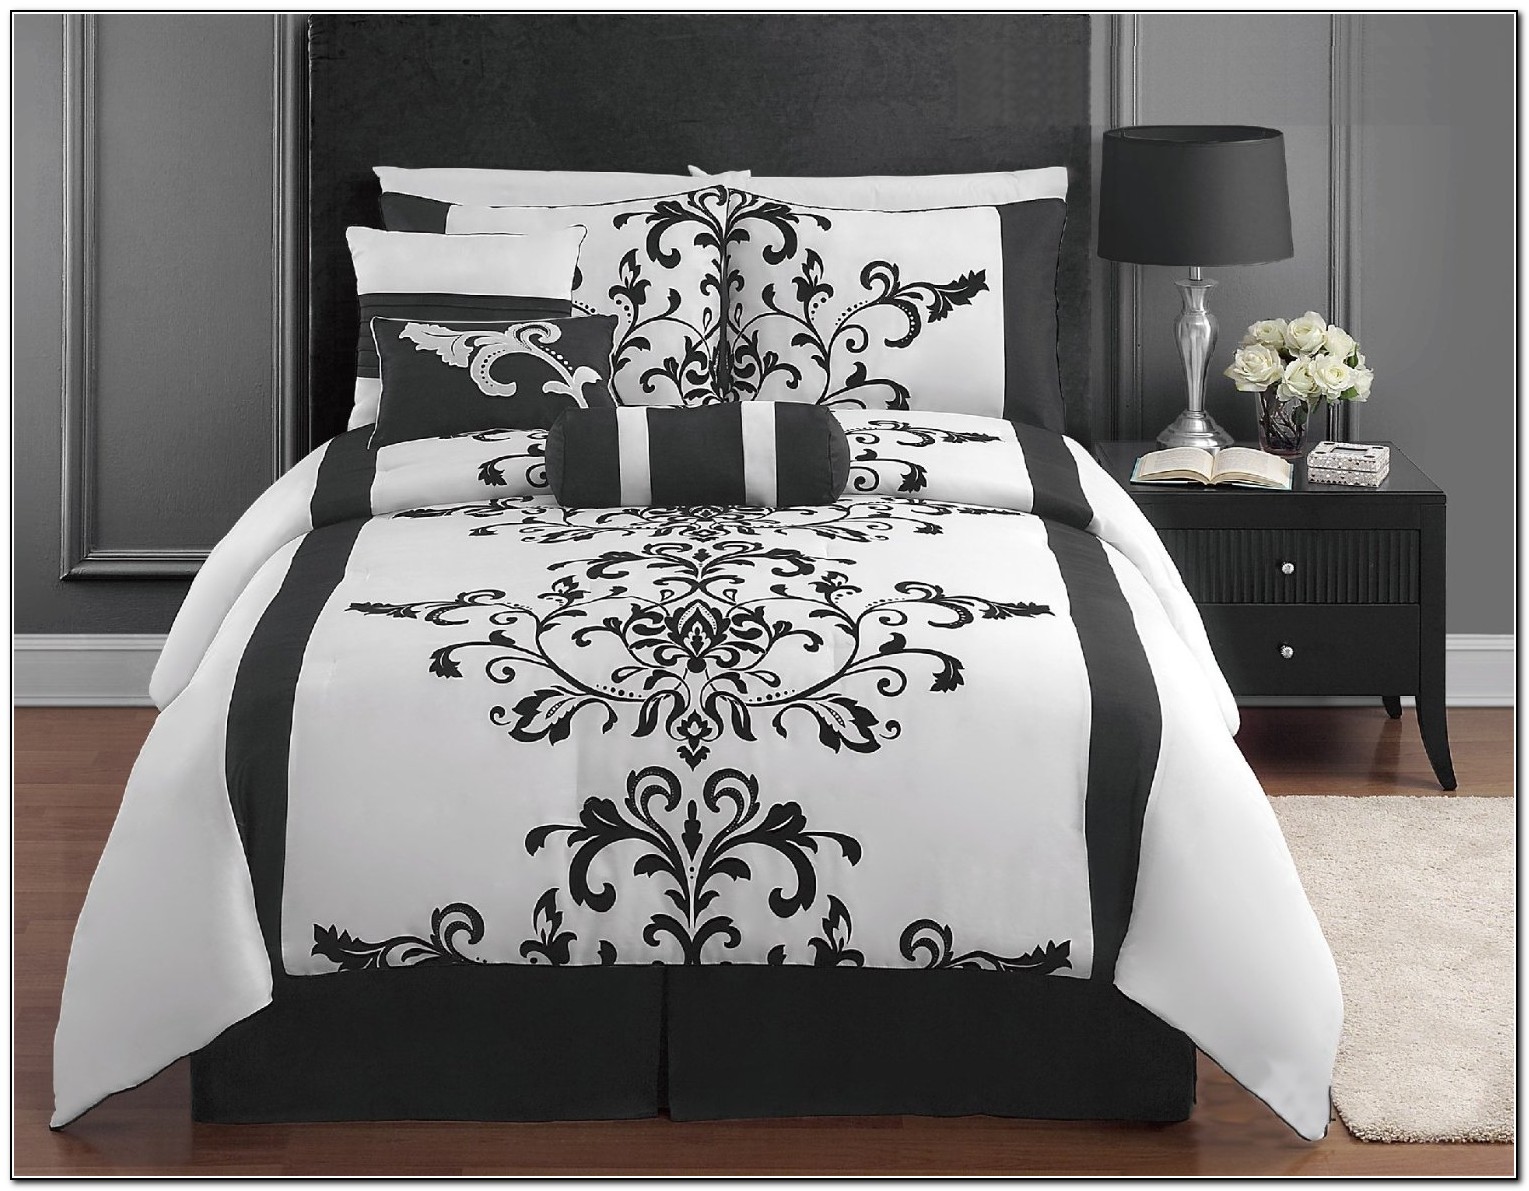 Black And White Bedding Sets Full Size